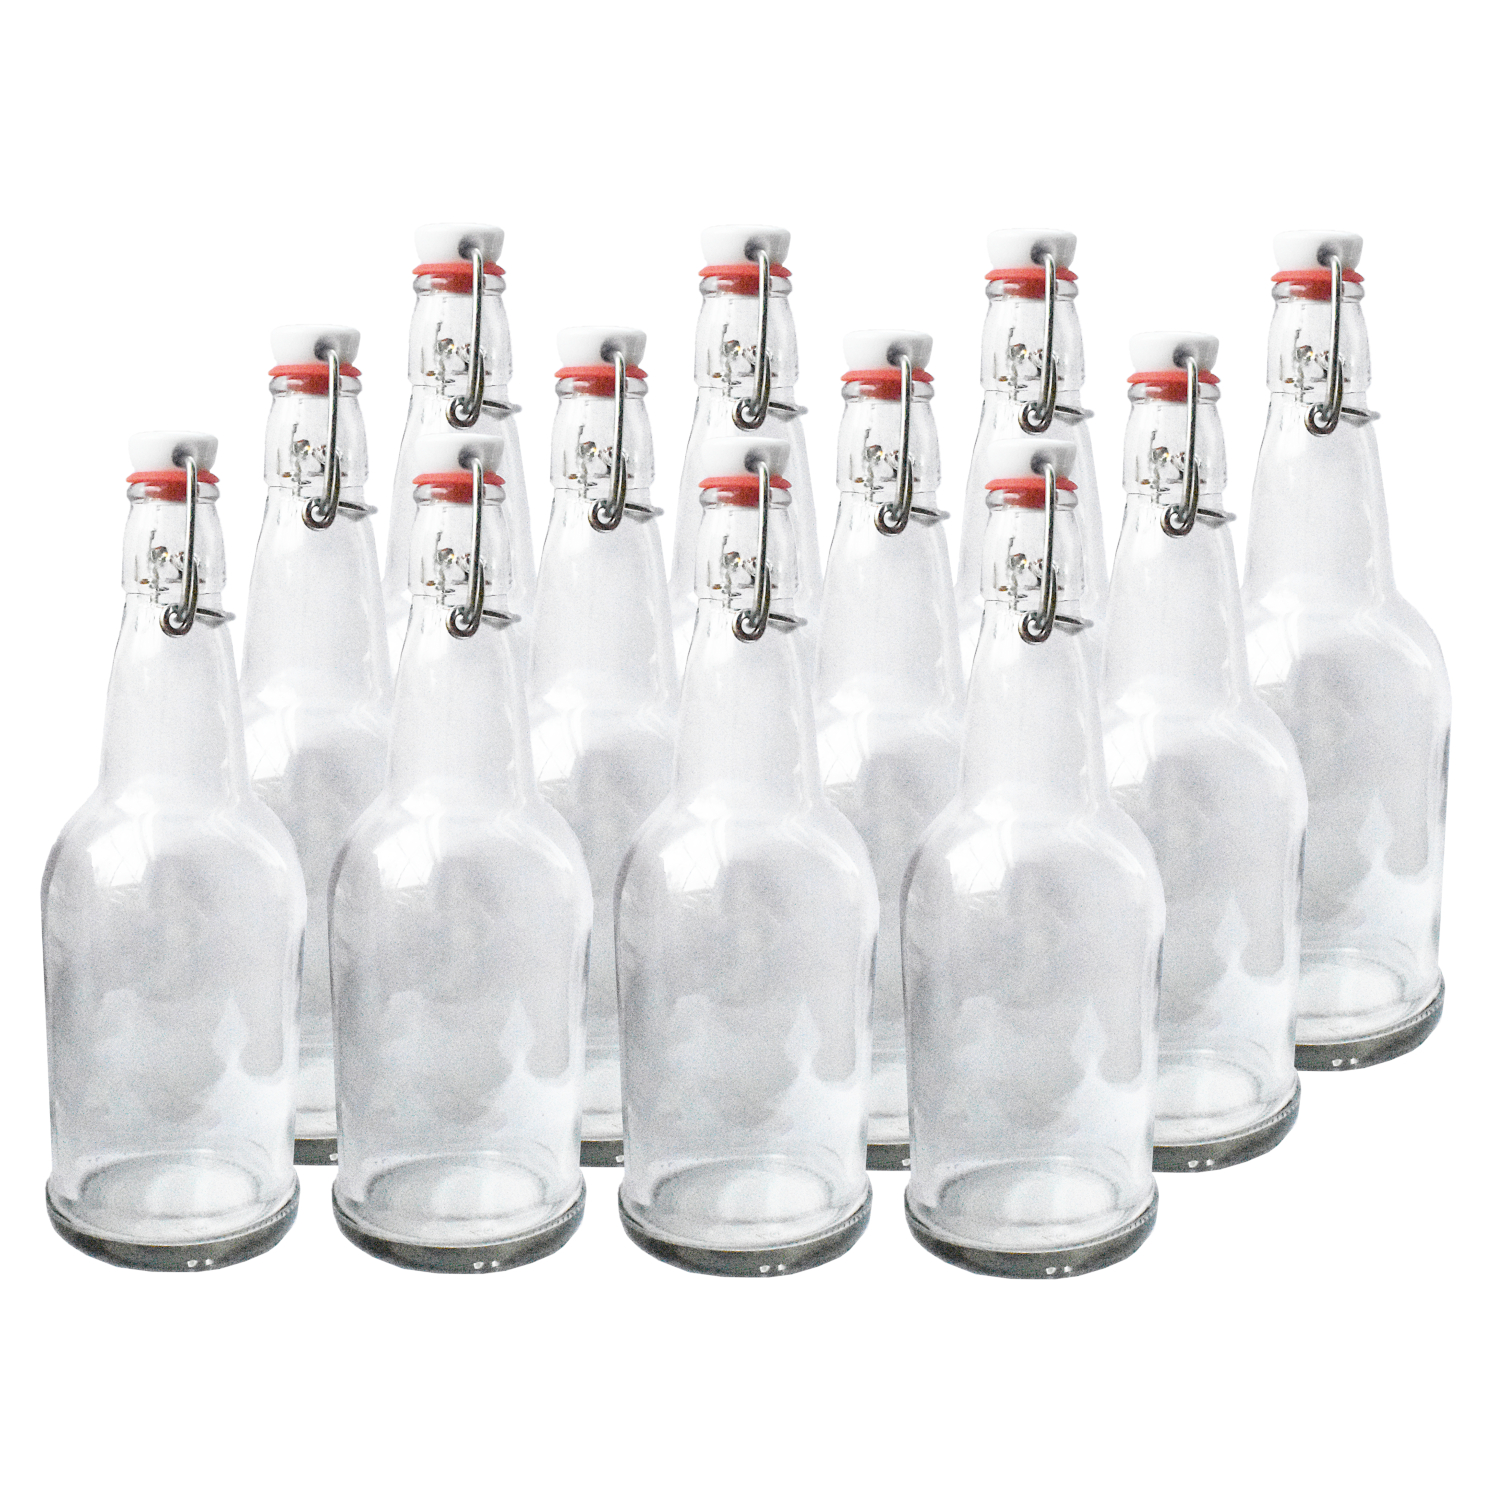 Details about   6 Set of Glass Bottle Bellemain Swing Top Grolsch 16oz For Brewing Kombucha Beer 